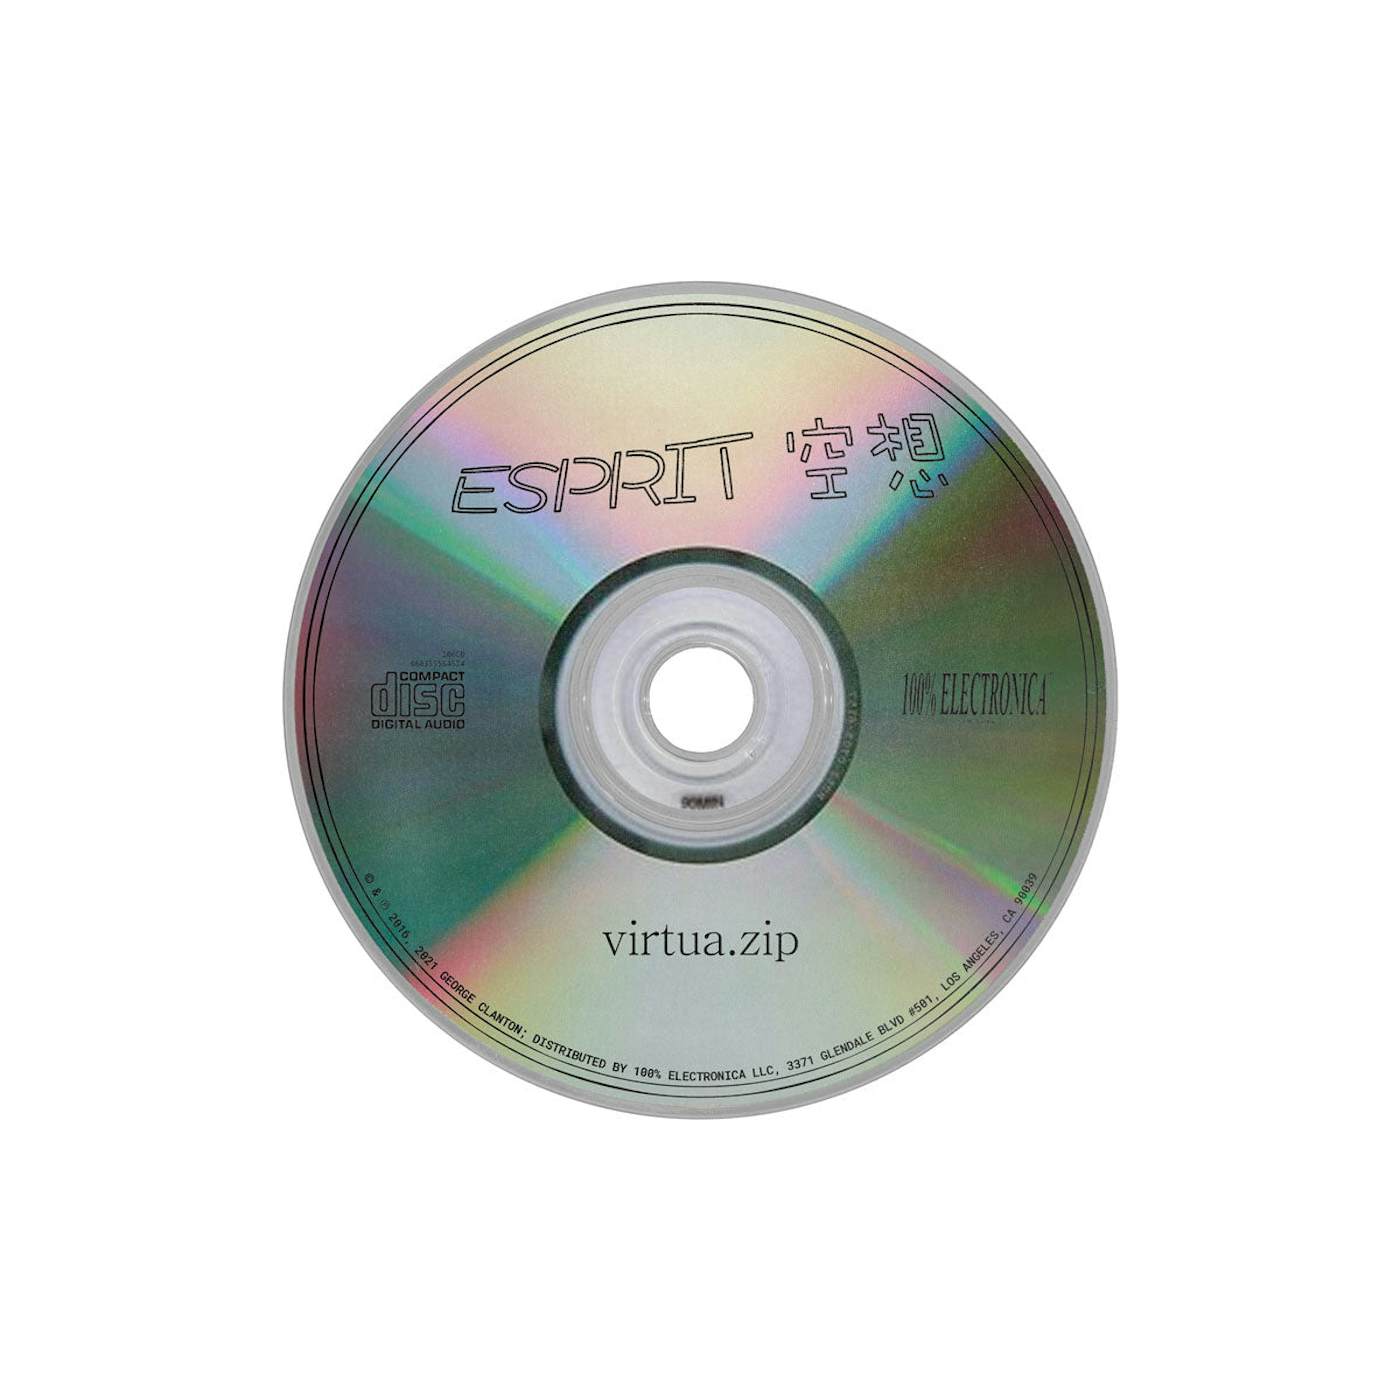 ESPRIT 空想 virtua.zip CD